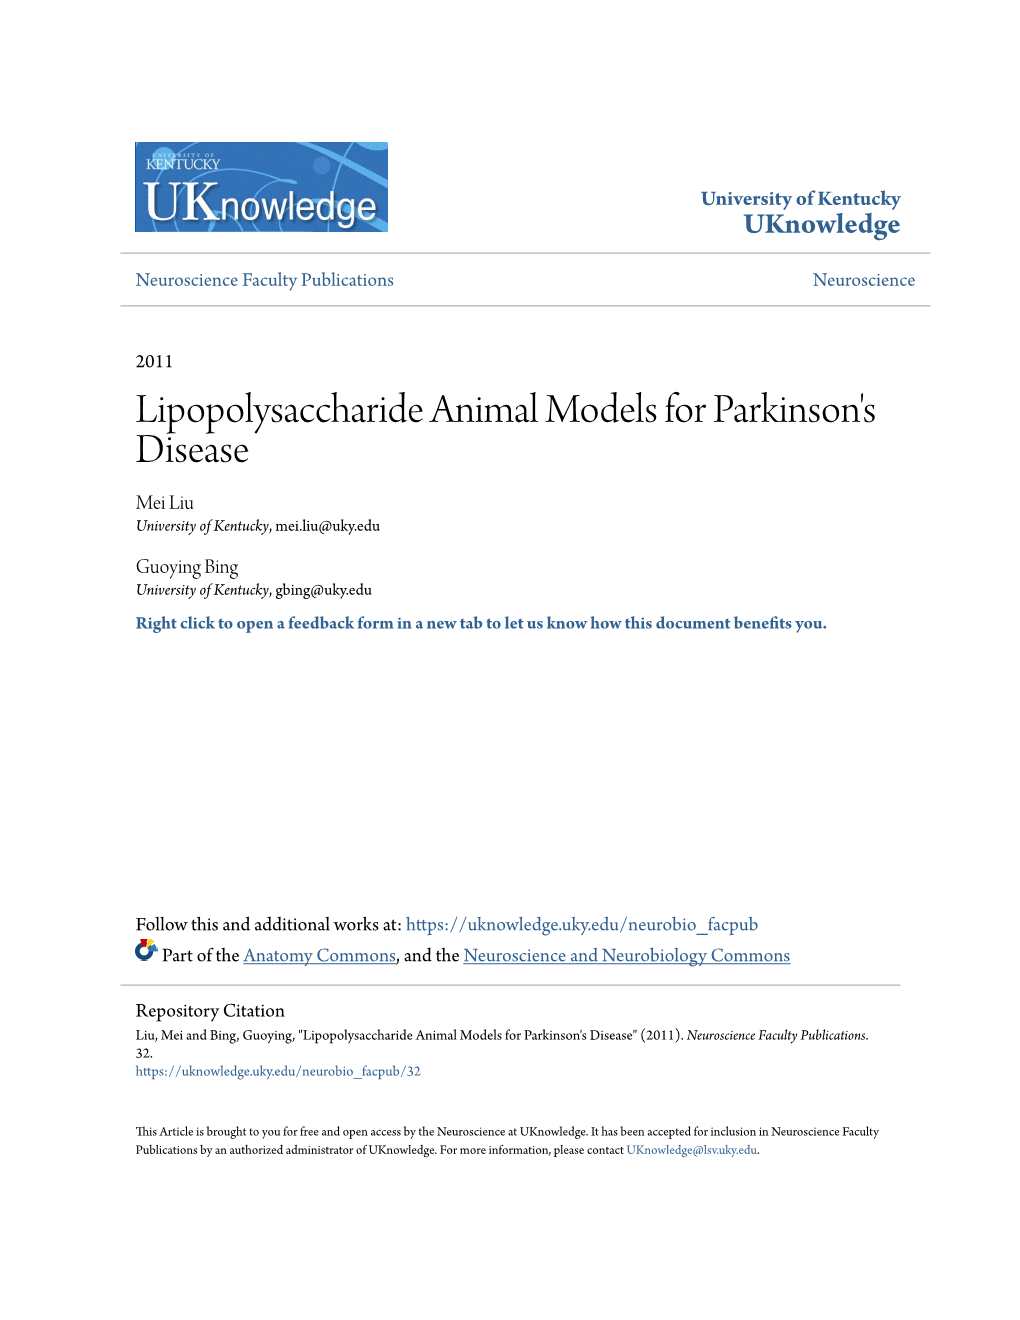 Lipopolysaccharide Animal Models for Parkinson's Disease Mei Liu University of Kentucky, Mei.Liu@Uky.Edu